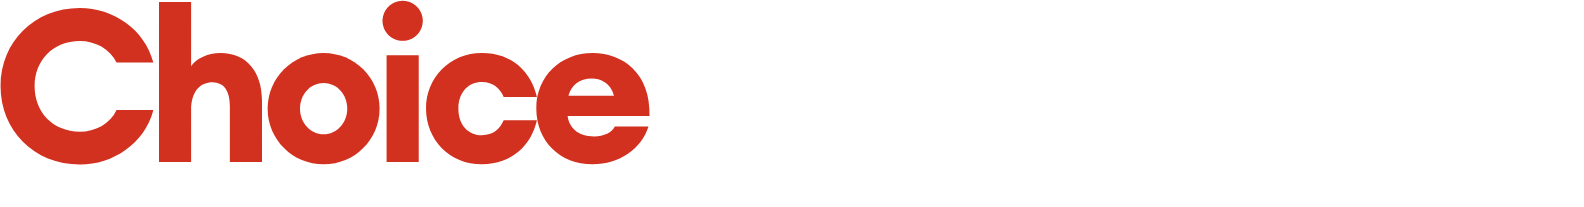 Choice Properties REIT logo large for dark backgrounds (transparent PNG)